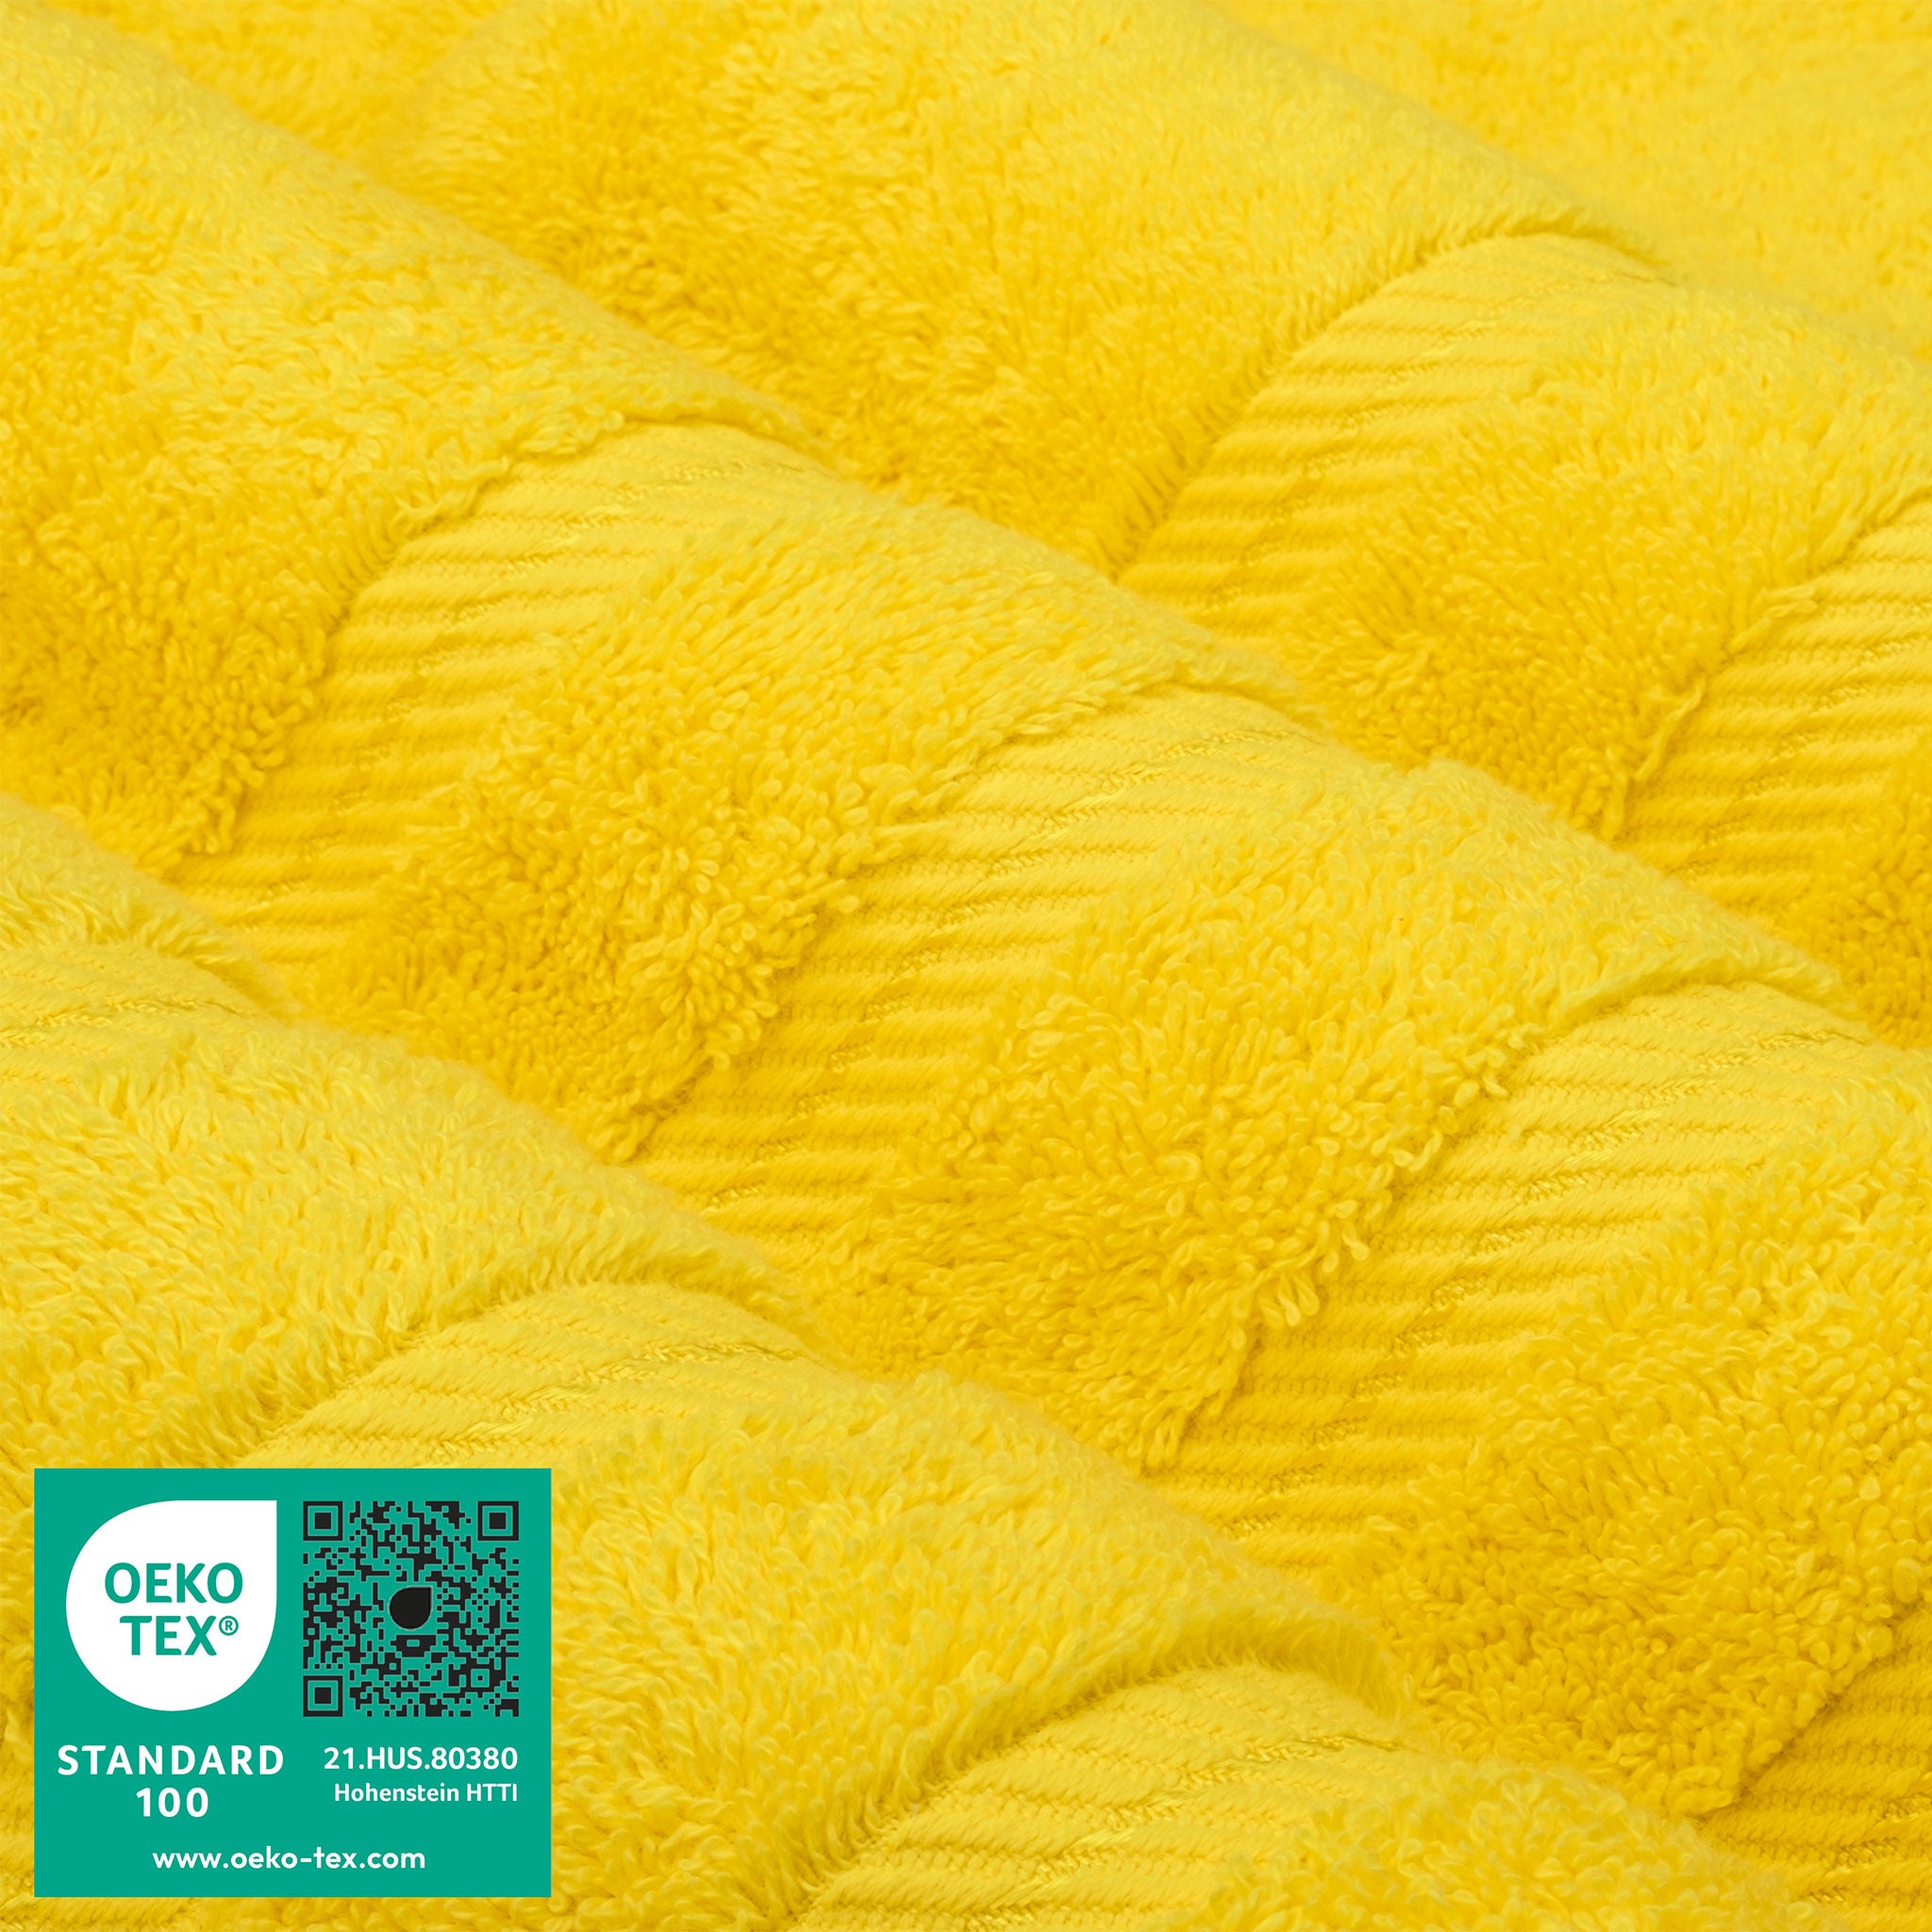 American Soft Linen 35x70 Inch 100% Turkish Cotton Jumbo Bath Sheet yellow-2